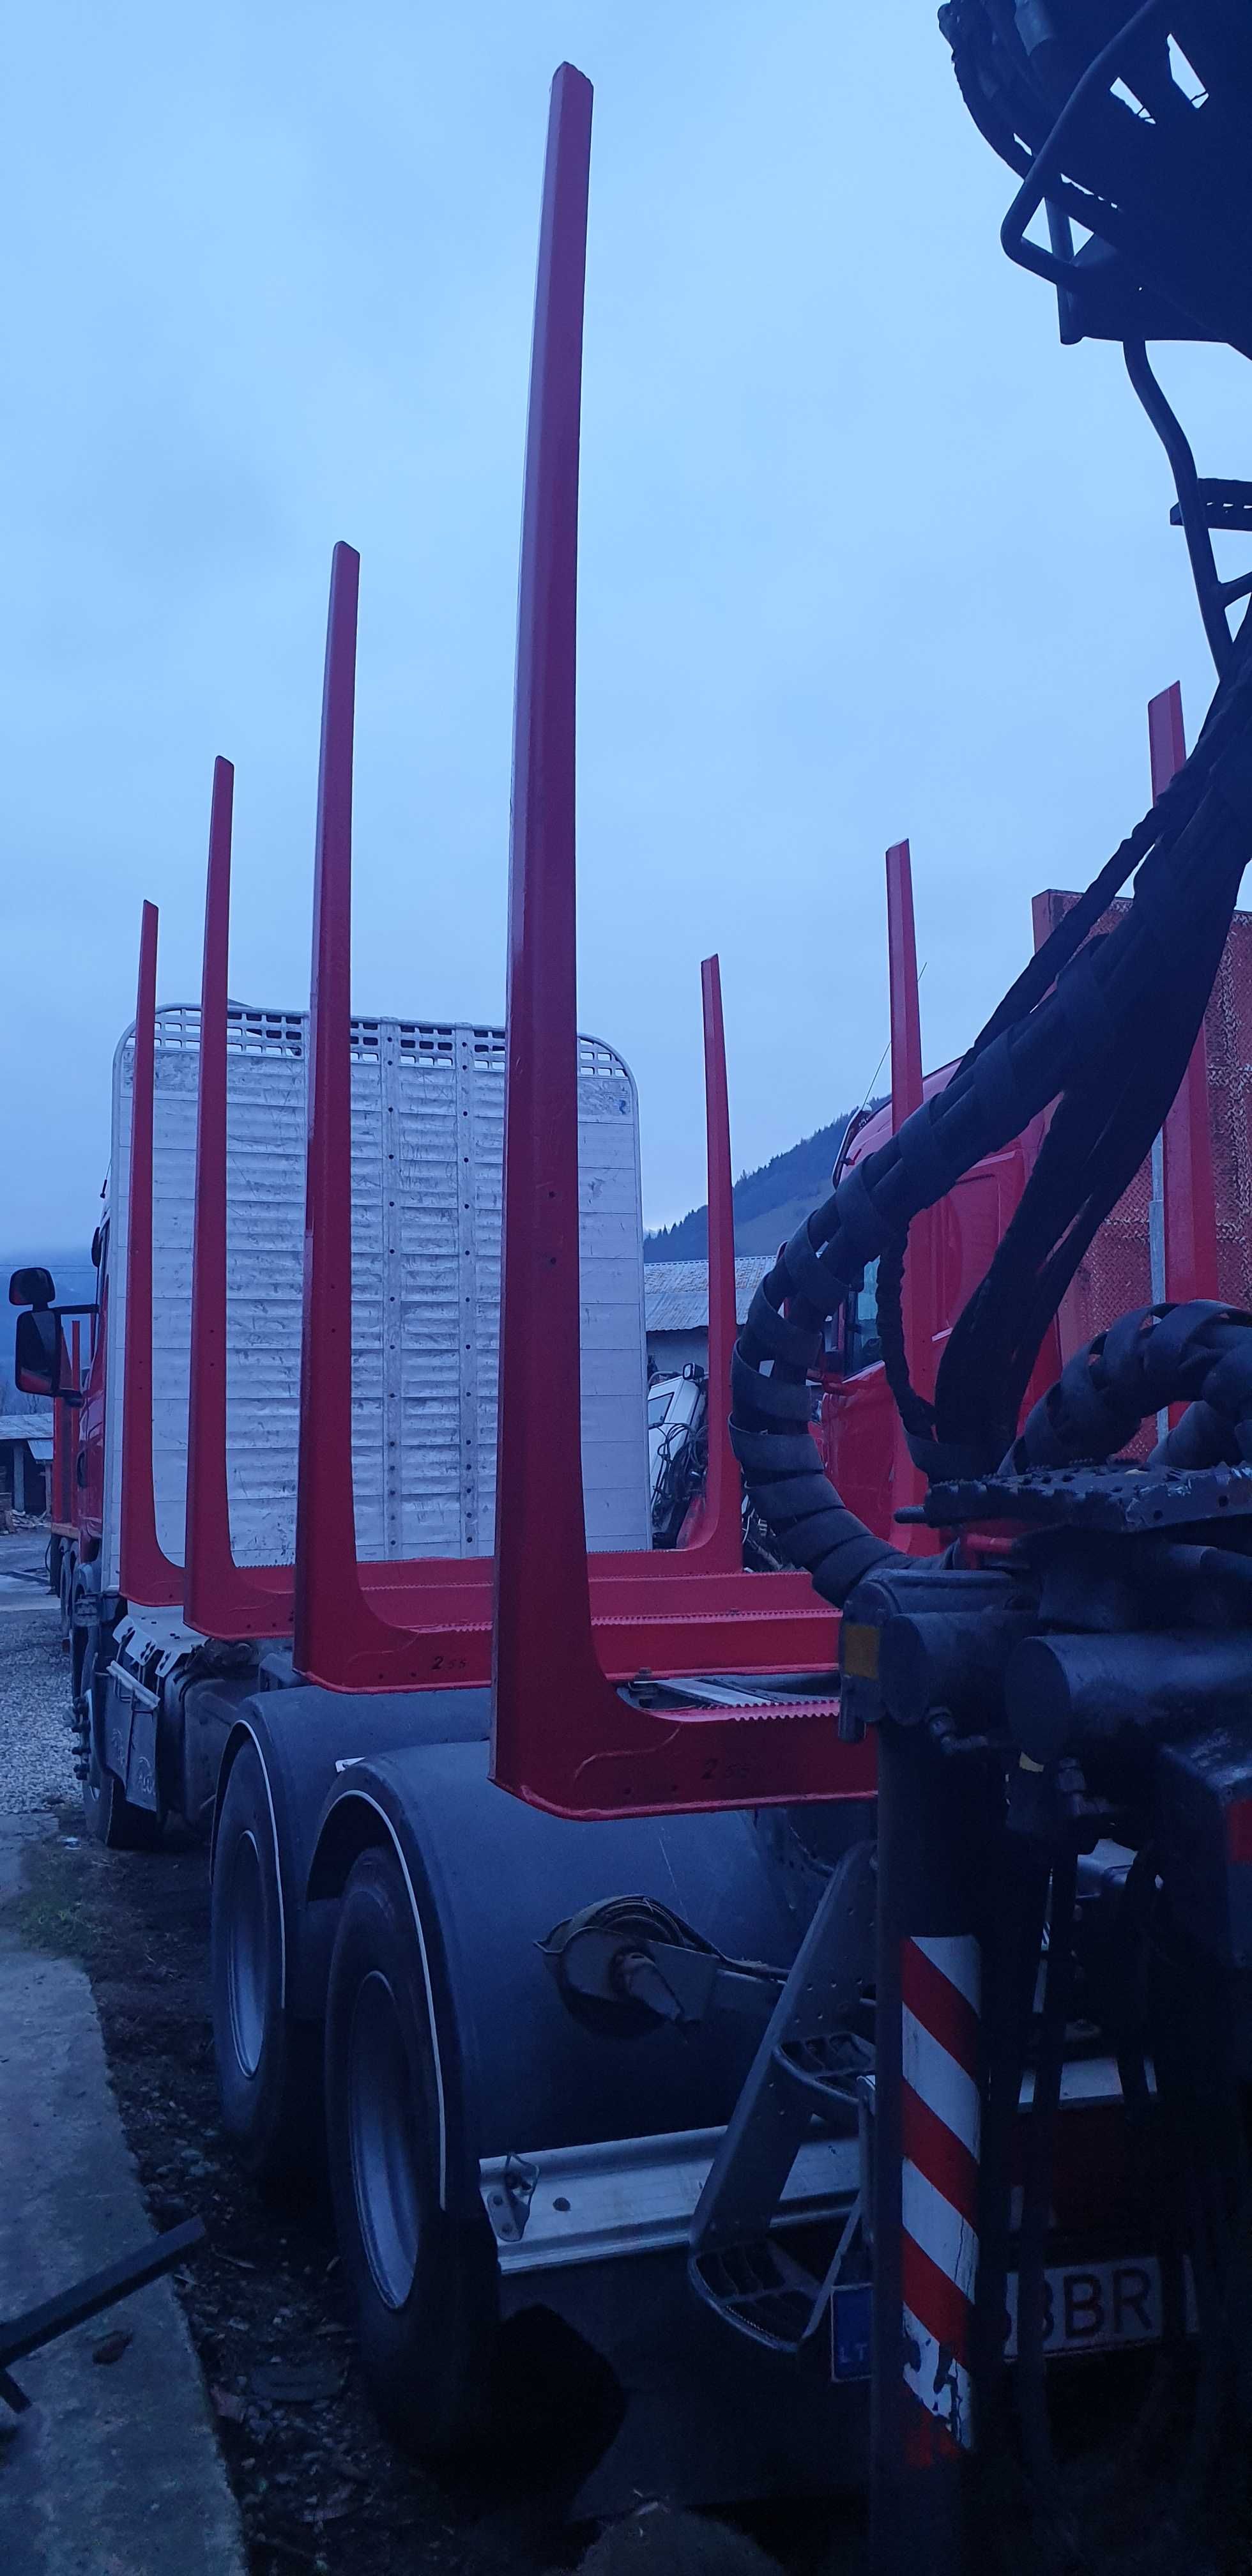 Scania R730 camion forestier,epsilon